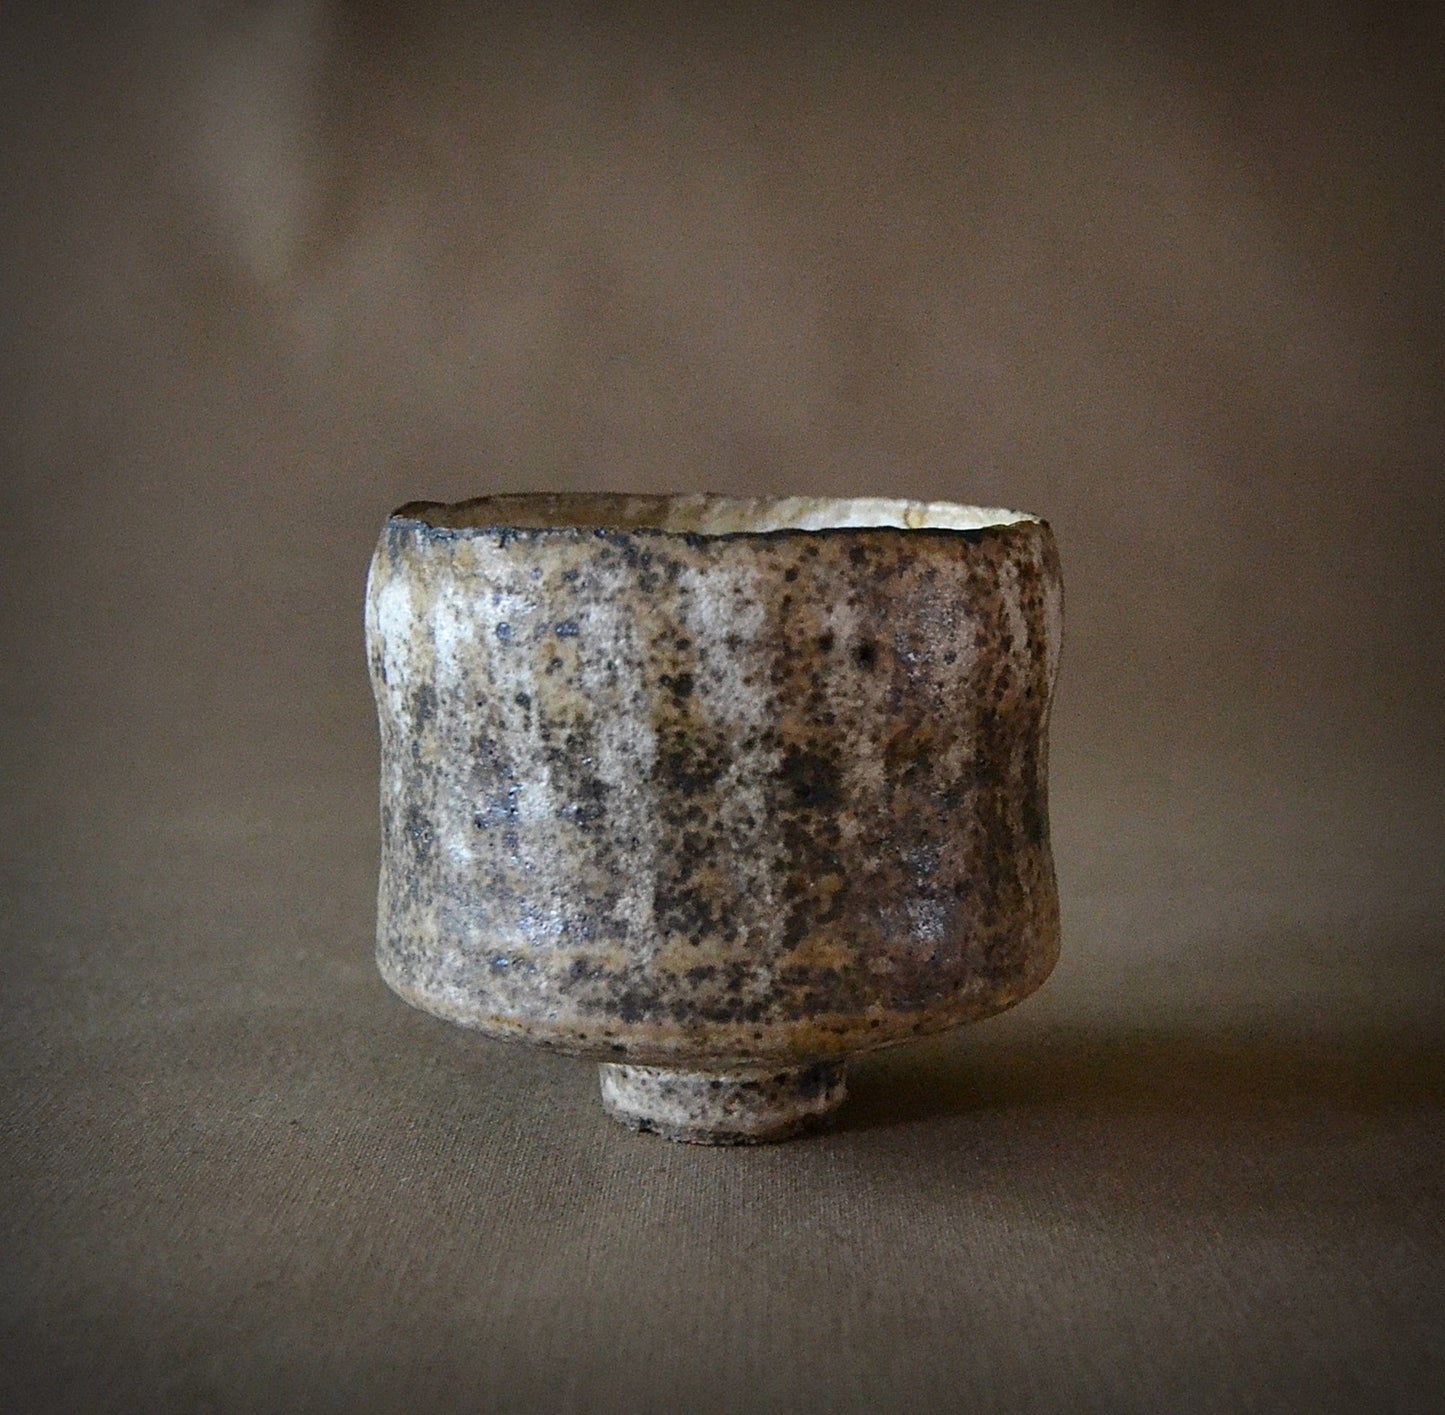 Chawan Ceramic Tea Cup No. 8 by Propeler Studio Coffee cup